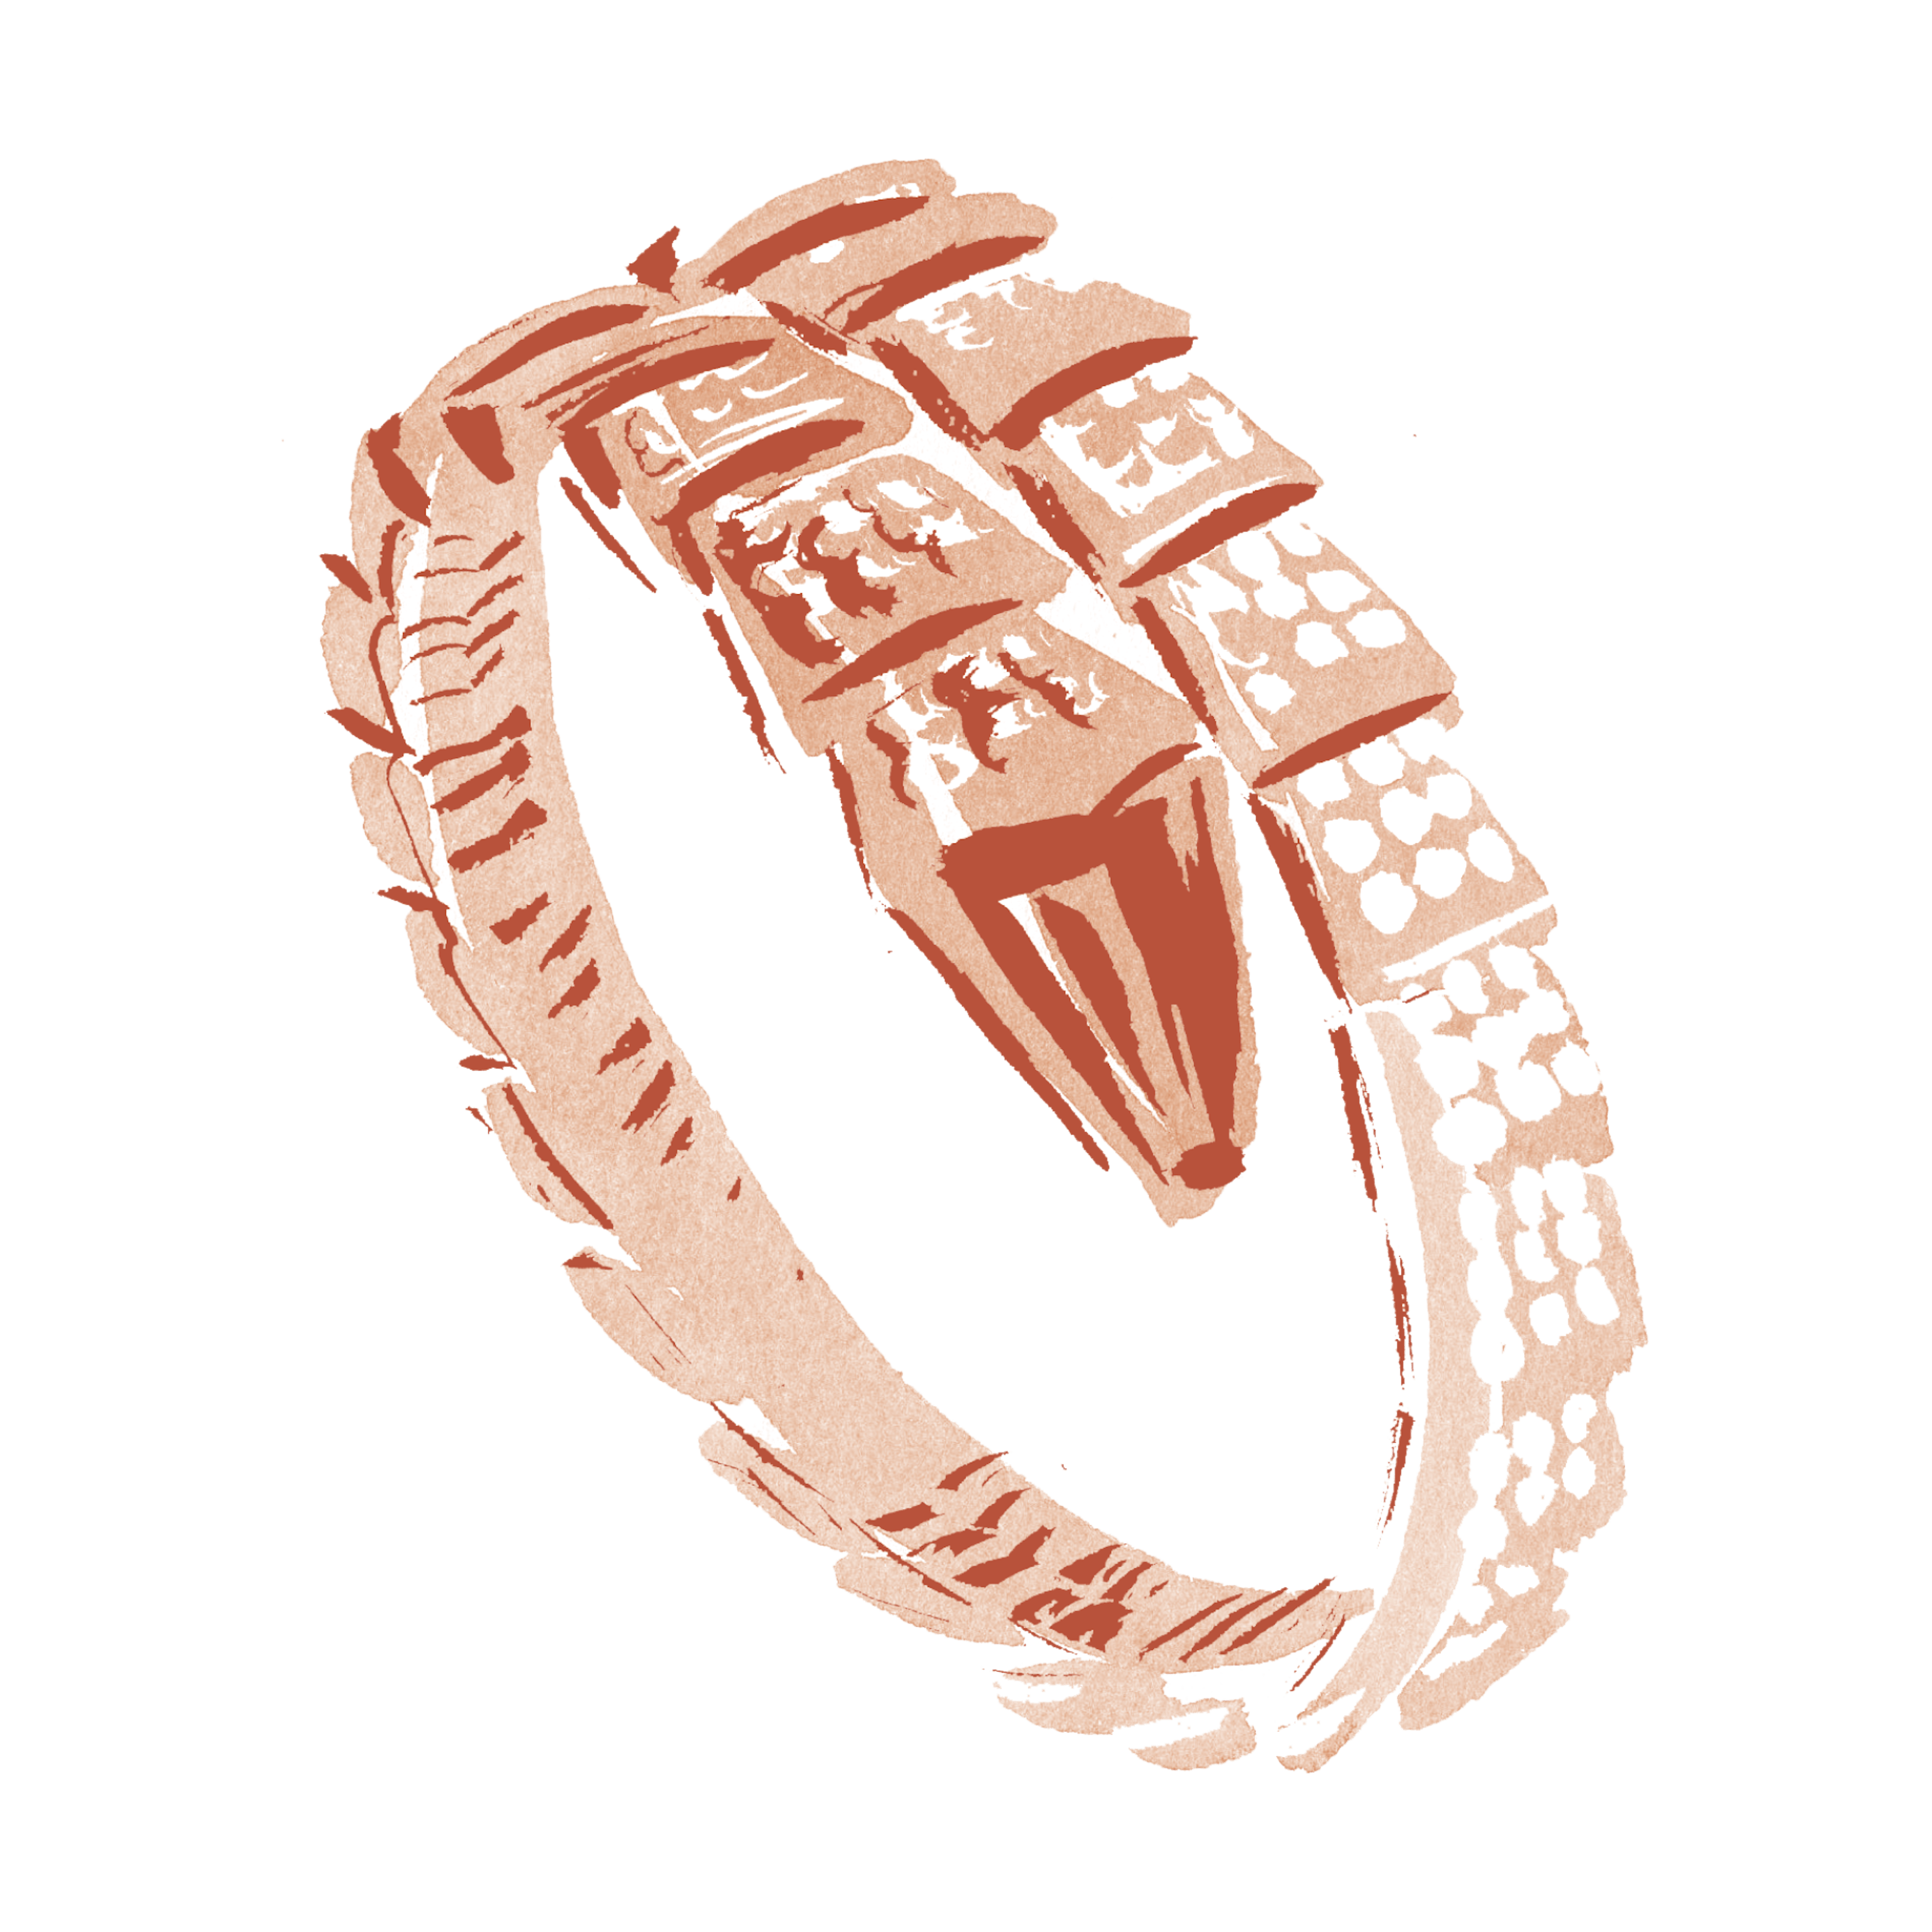 Illustration of a Bulgari jewel